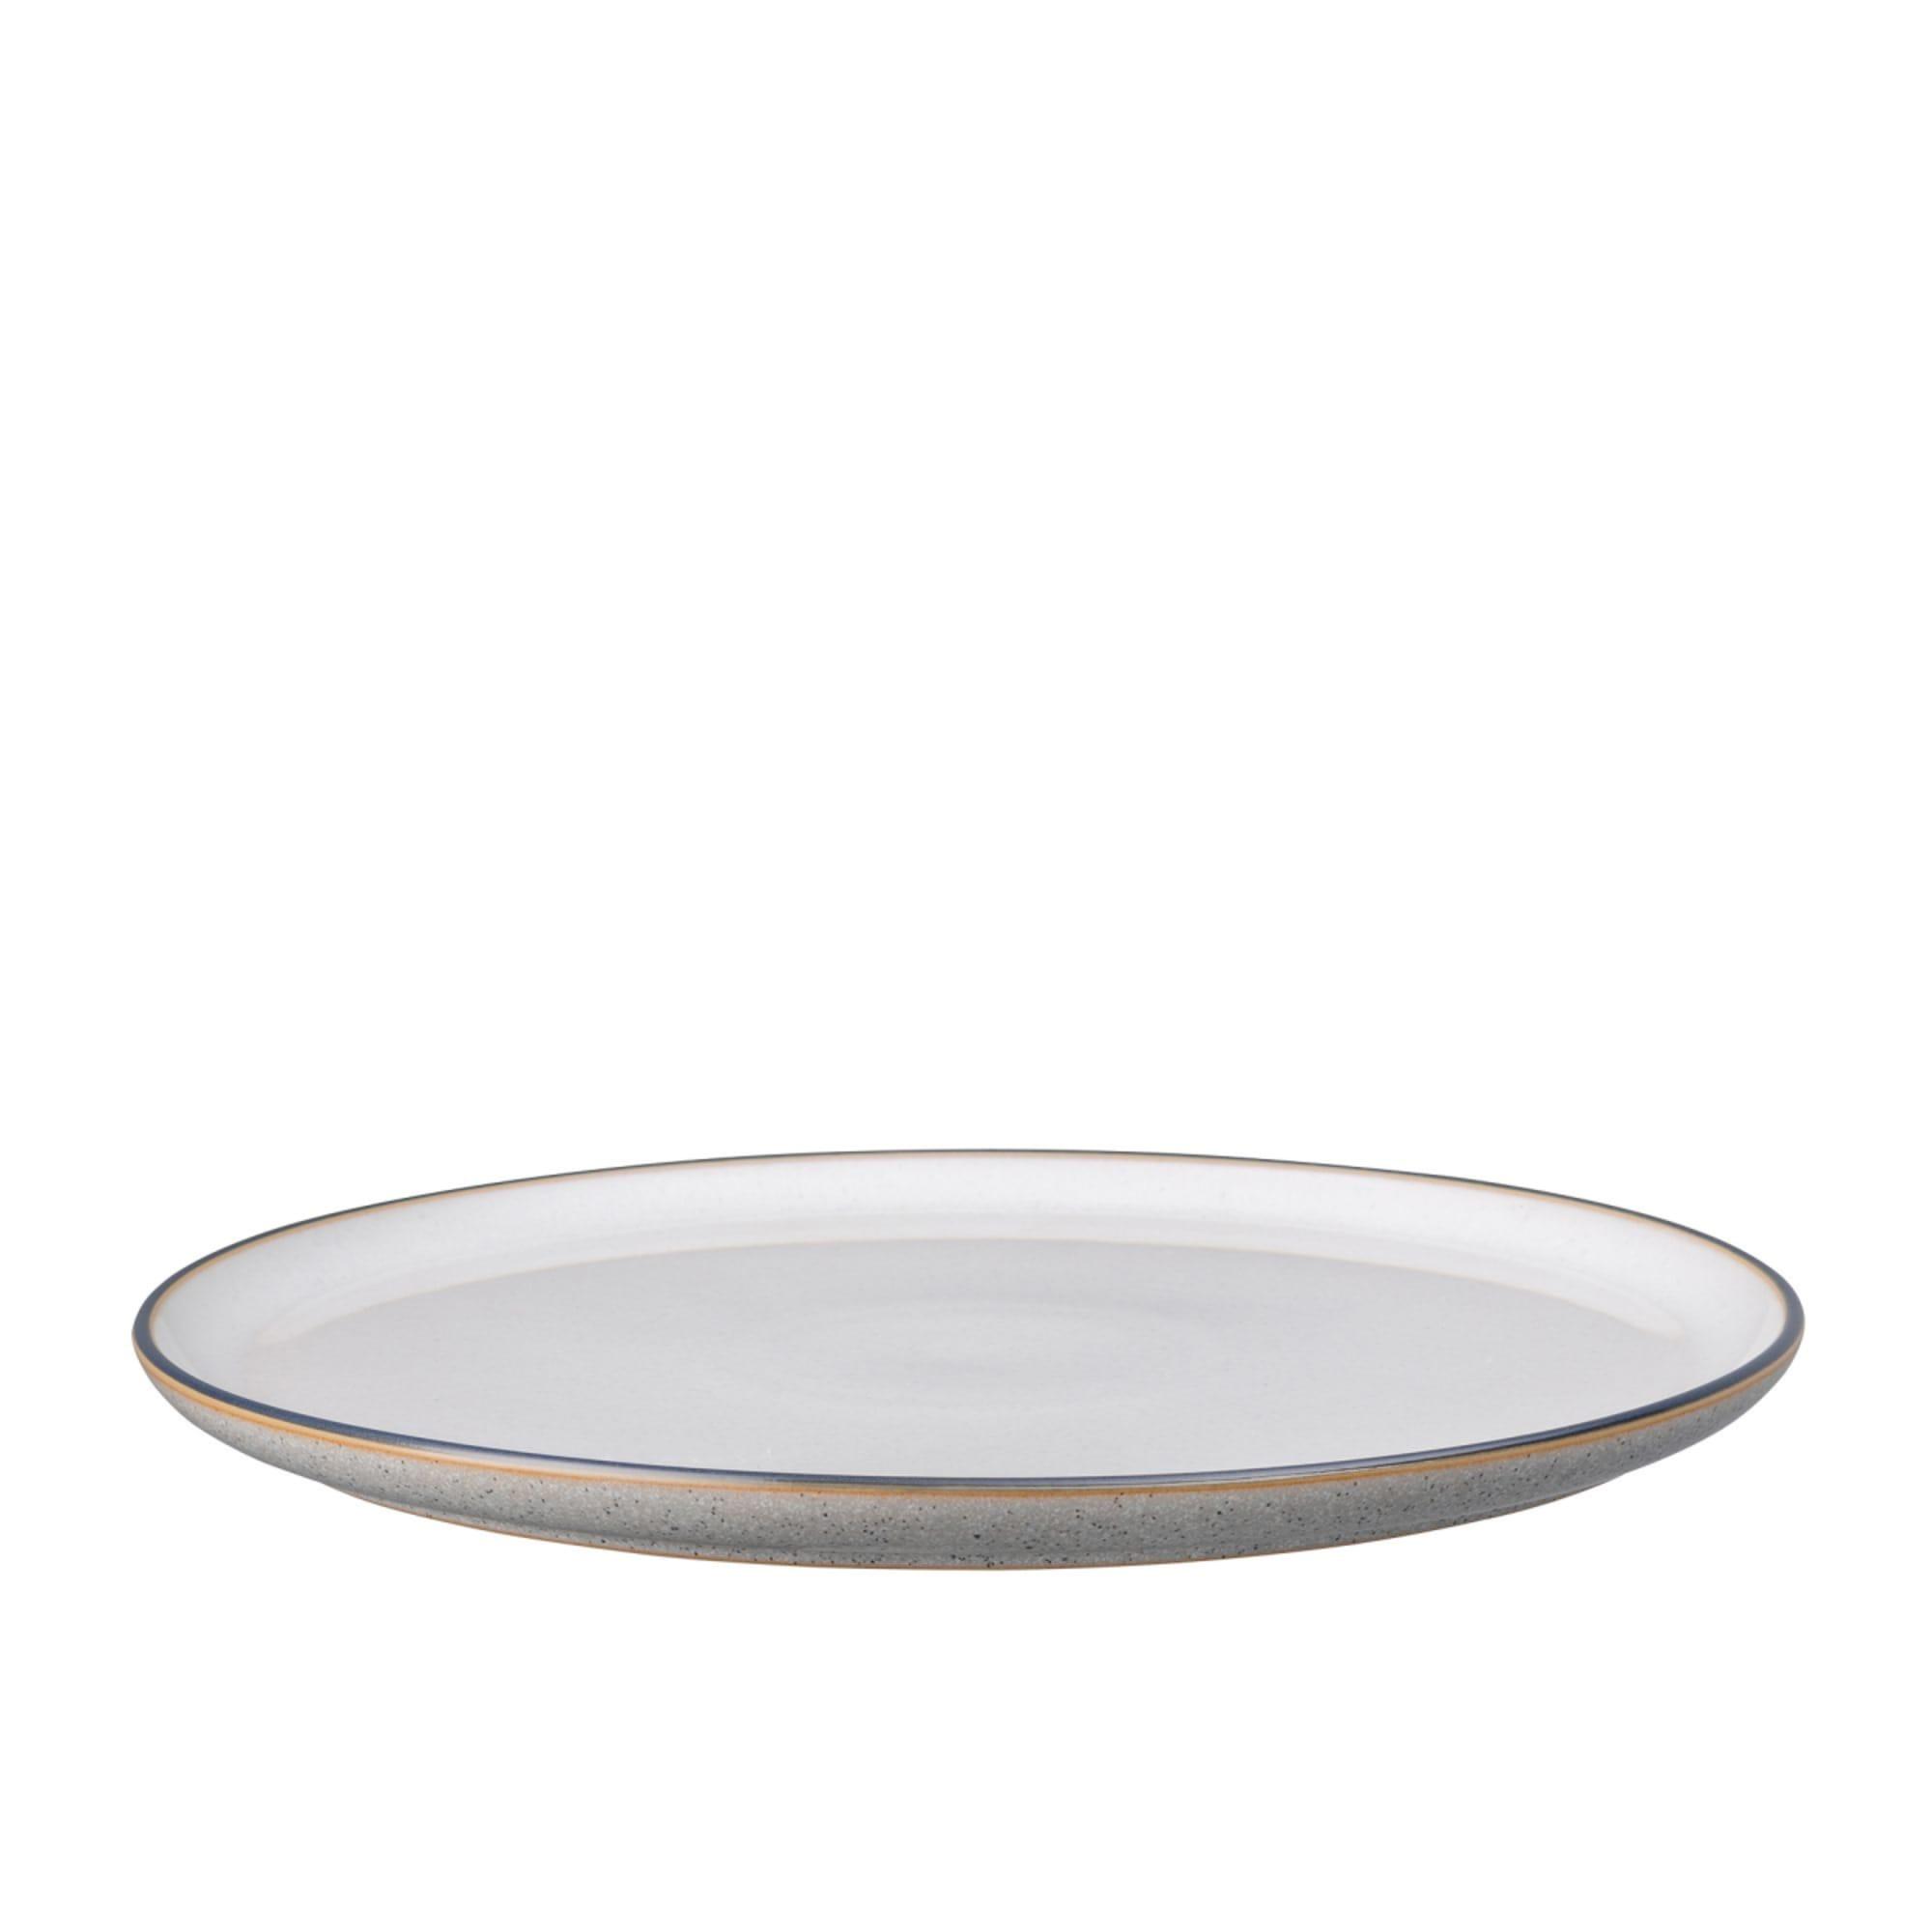 Denby Studio Grey Round Platter 31cm White Image 2